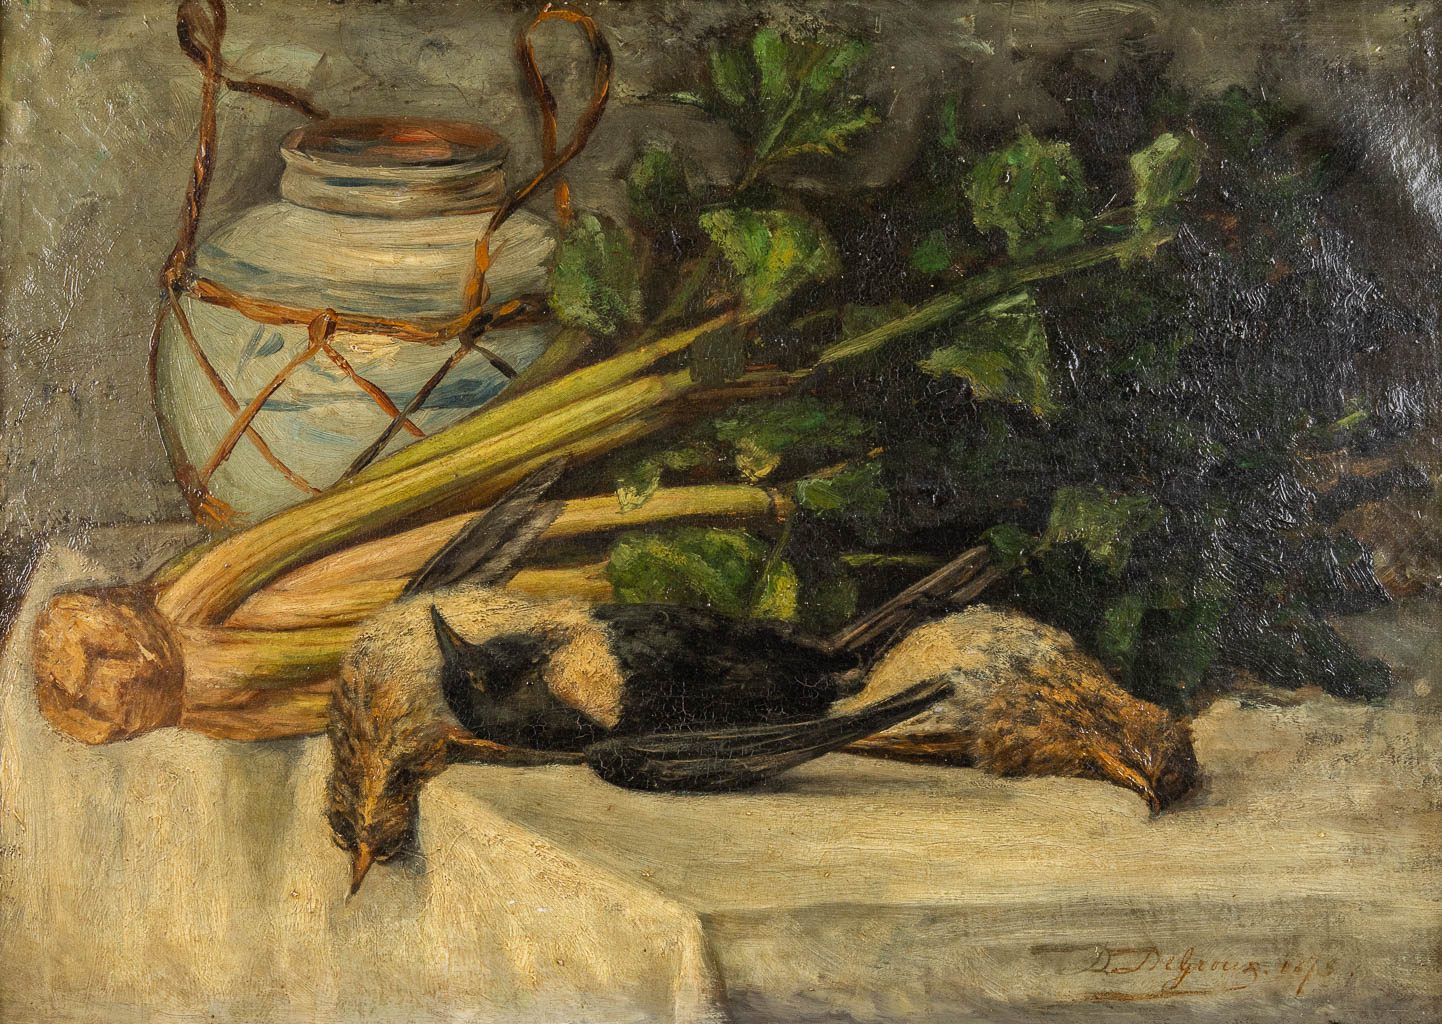 DE GROUX D. (XIX) 'A Still Life' oil on canvas. 1875. (W:60 x H:44 cm)